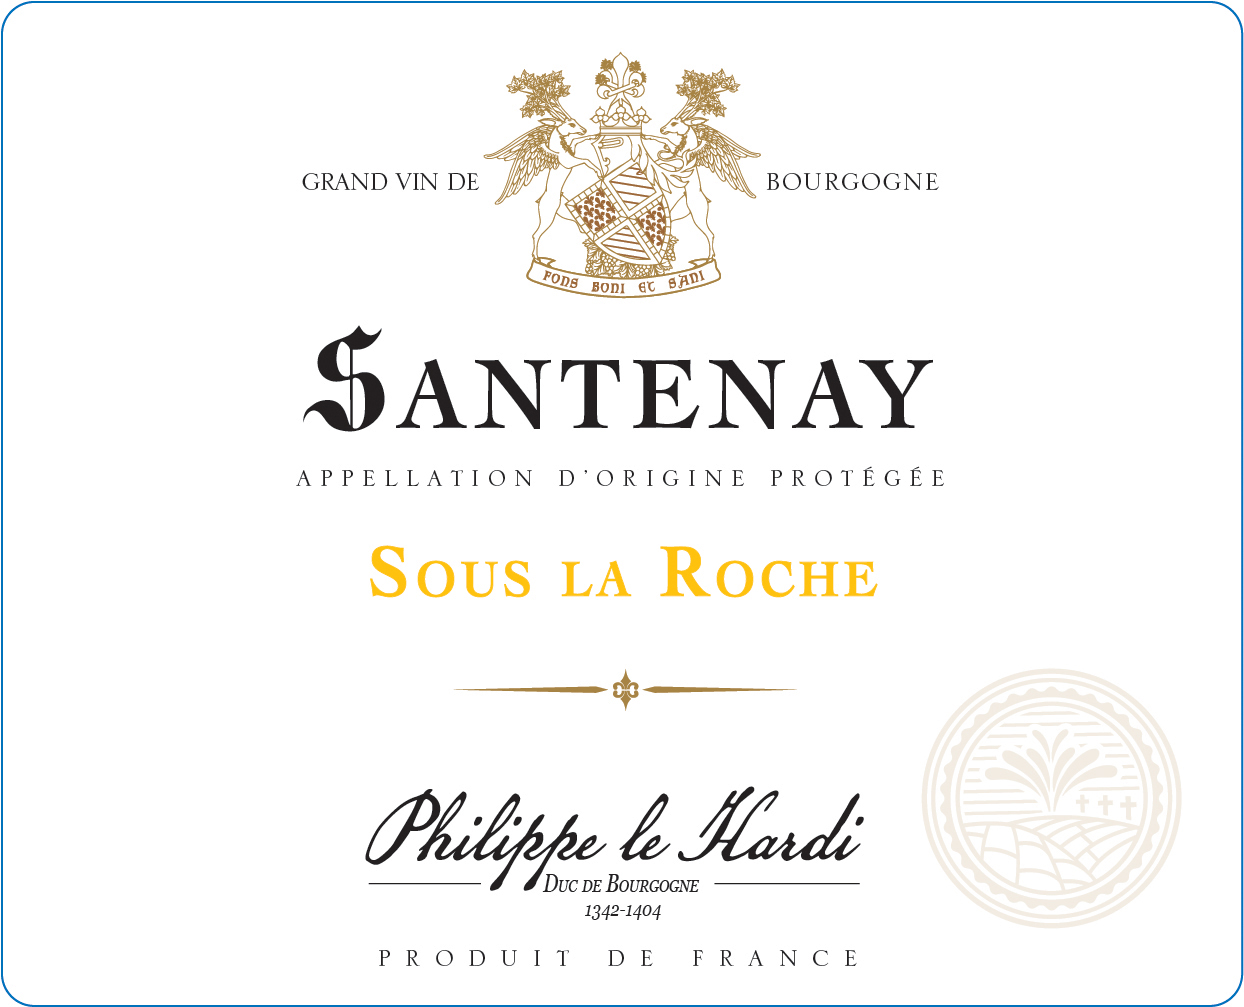 Philippe le Hardi - Santenay Blanc - Sous la Roche label